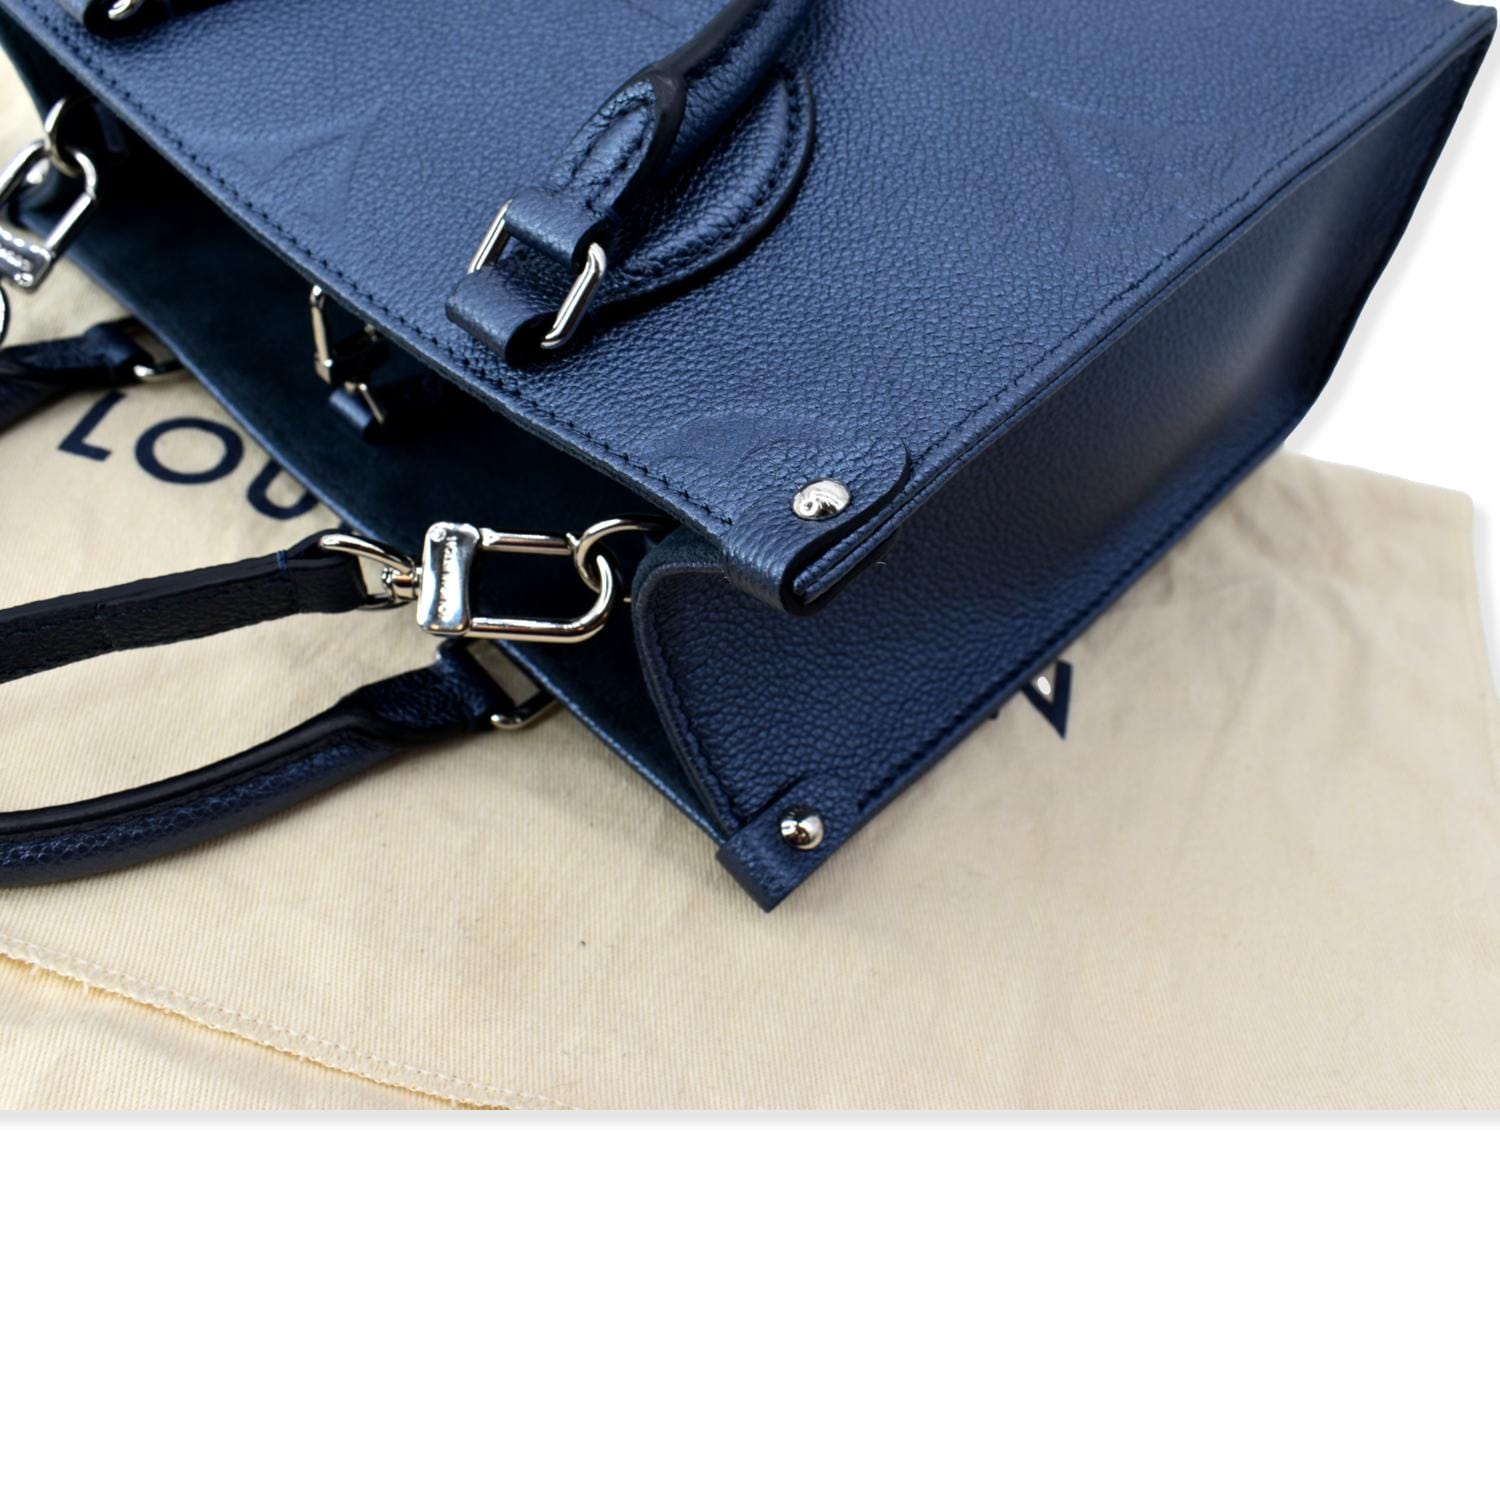 Louis Vuitton OnTheGo PM Tote Bag Navy Blue Monogram Empreinte